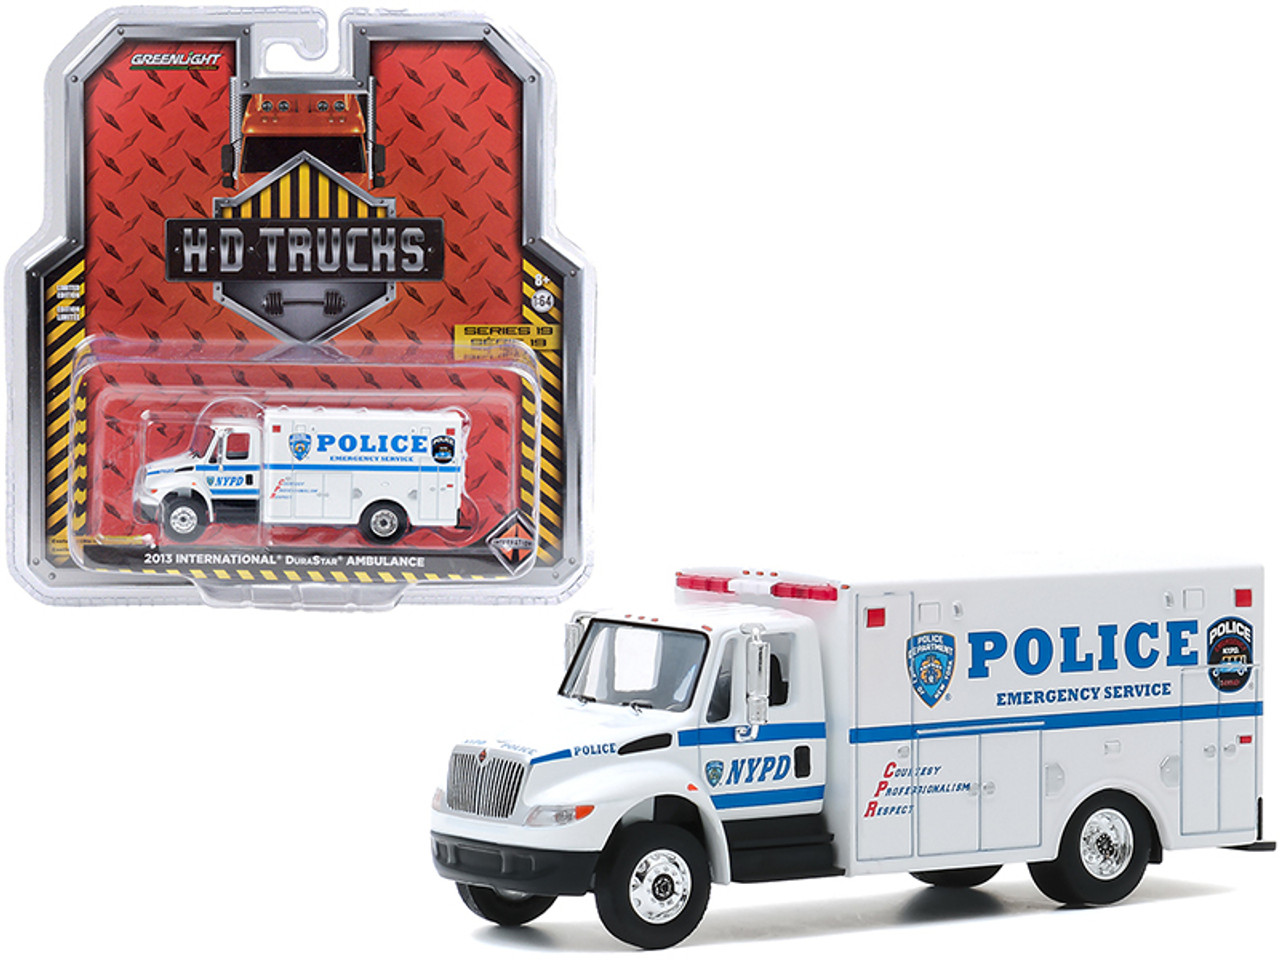 2013 International Durastar Emergency Service "New York City Police Department" (NYPD) White "H.D. Trucks" Series 19 1/64 Diecast Model by Greenlight